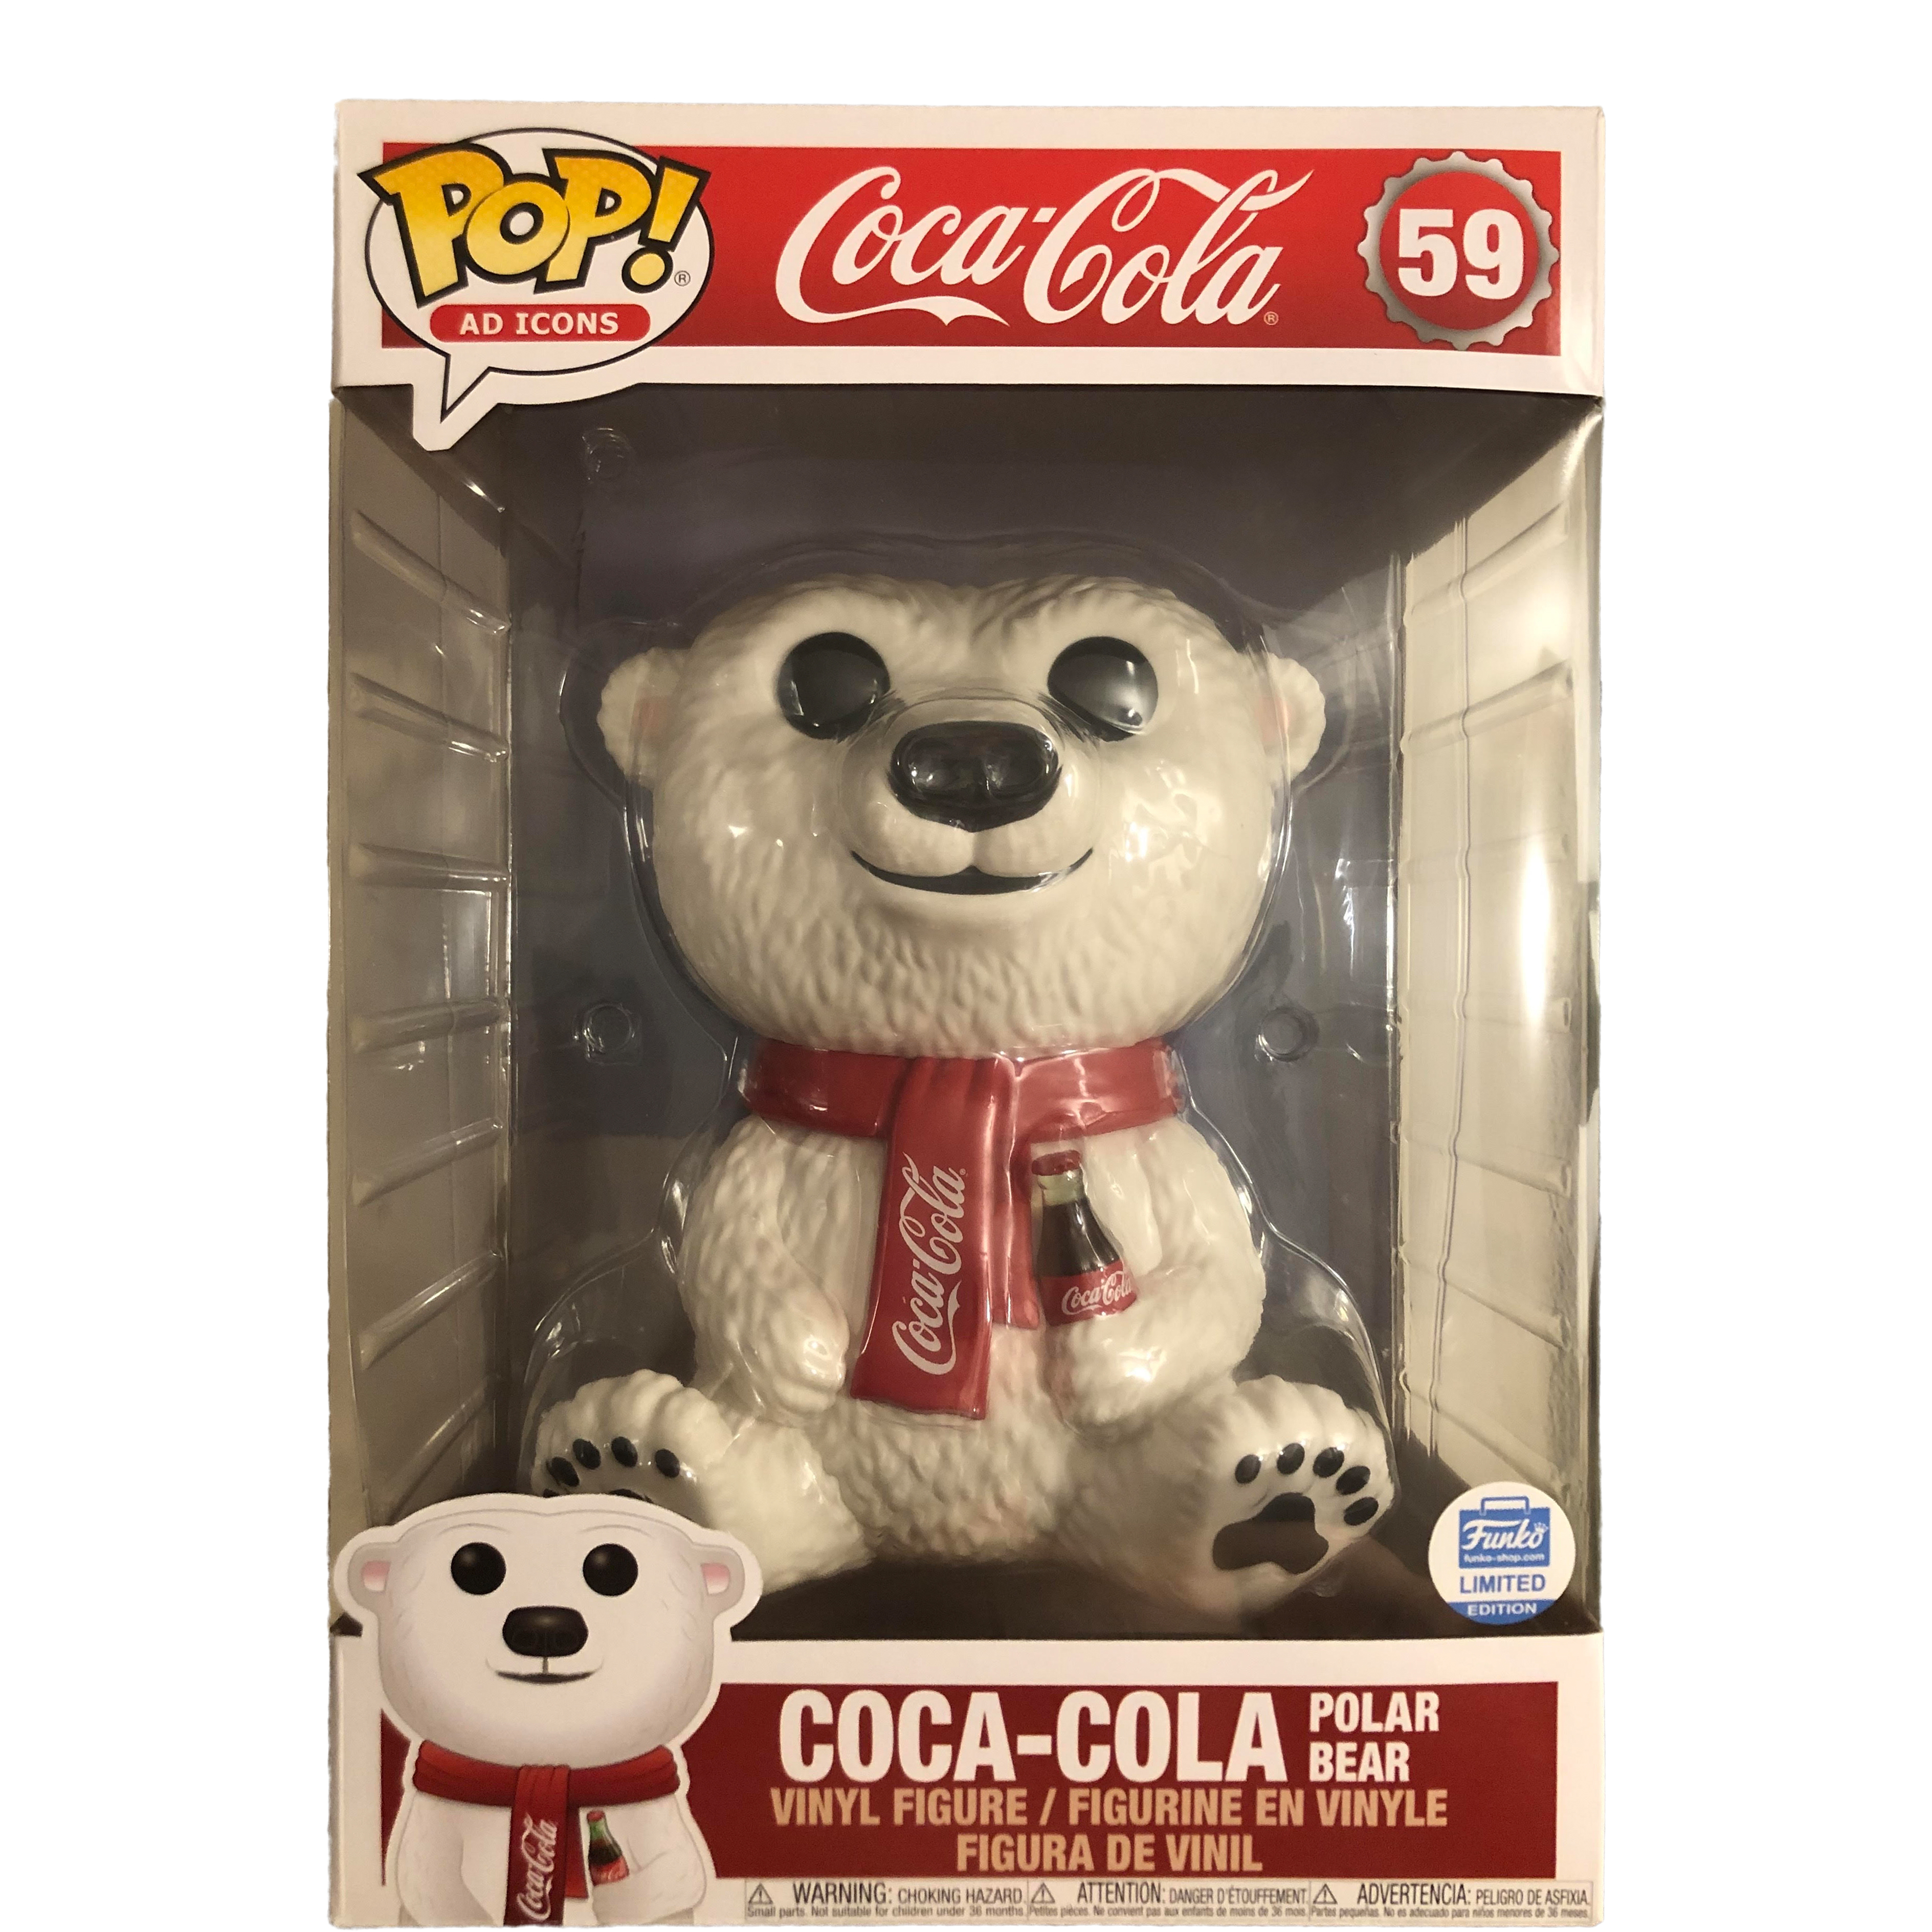 Funko Pop! Ad Icons Coca Cola Polar Bear Funko Shop Limited Editon